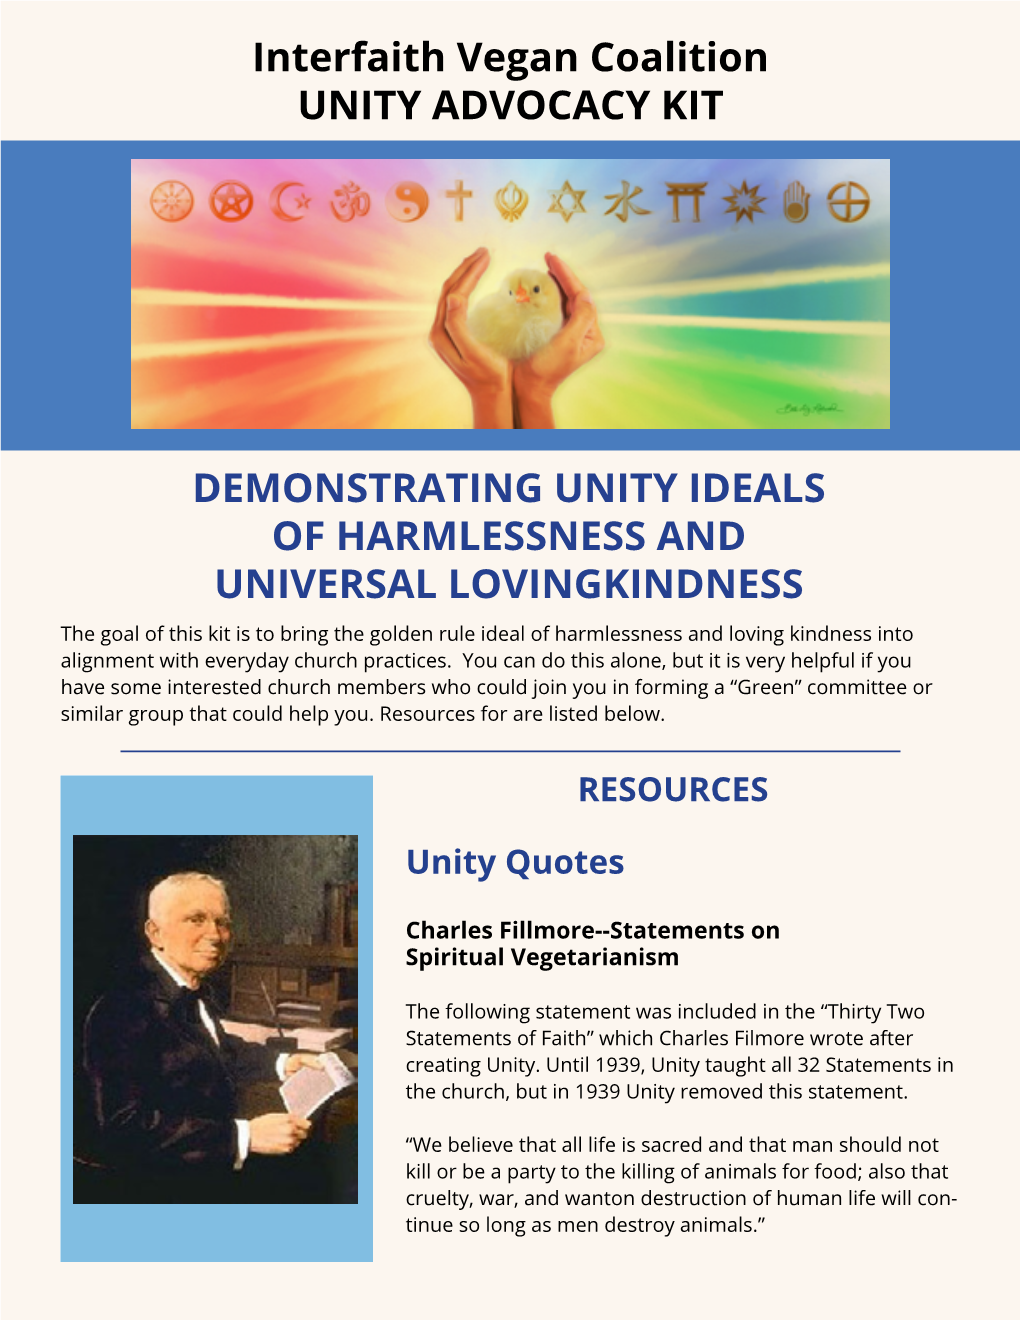 Interfaith Vegan Coalition Unity Advocacy Kit Demonstrating Unity